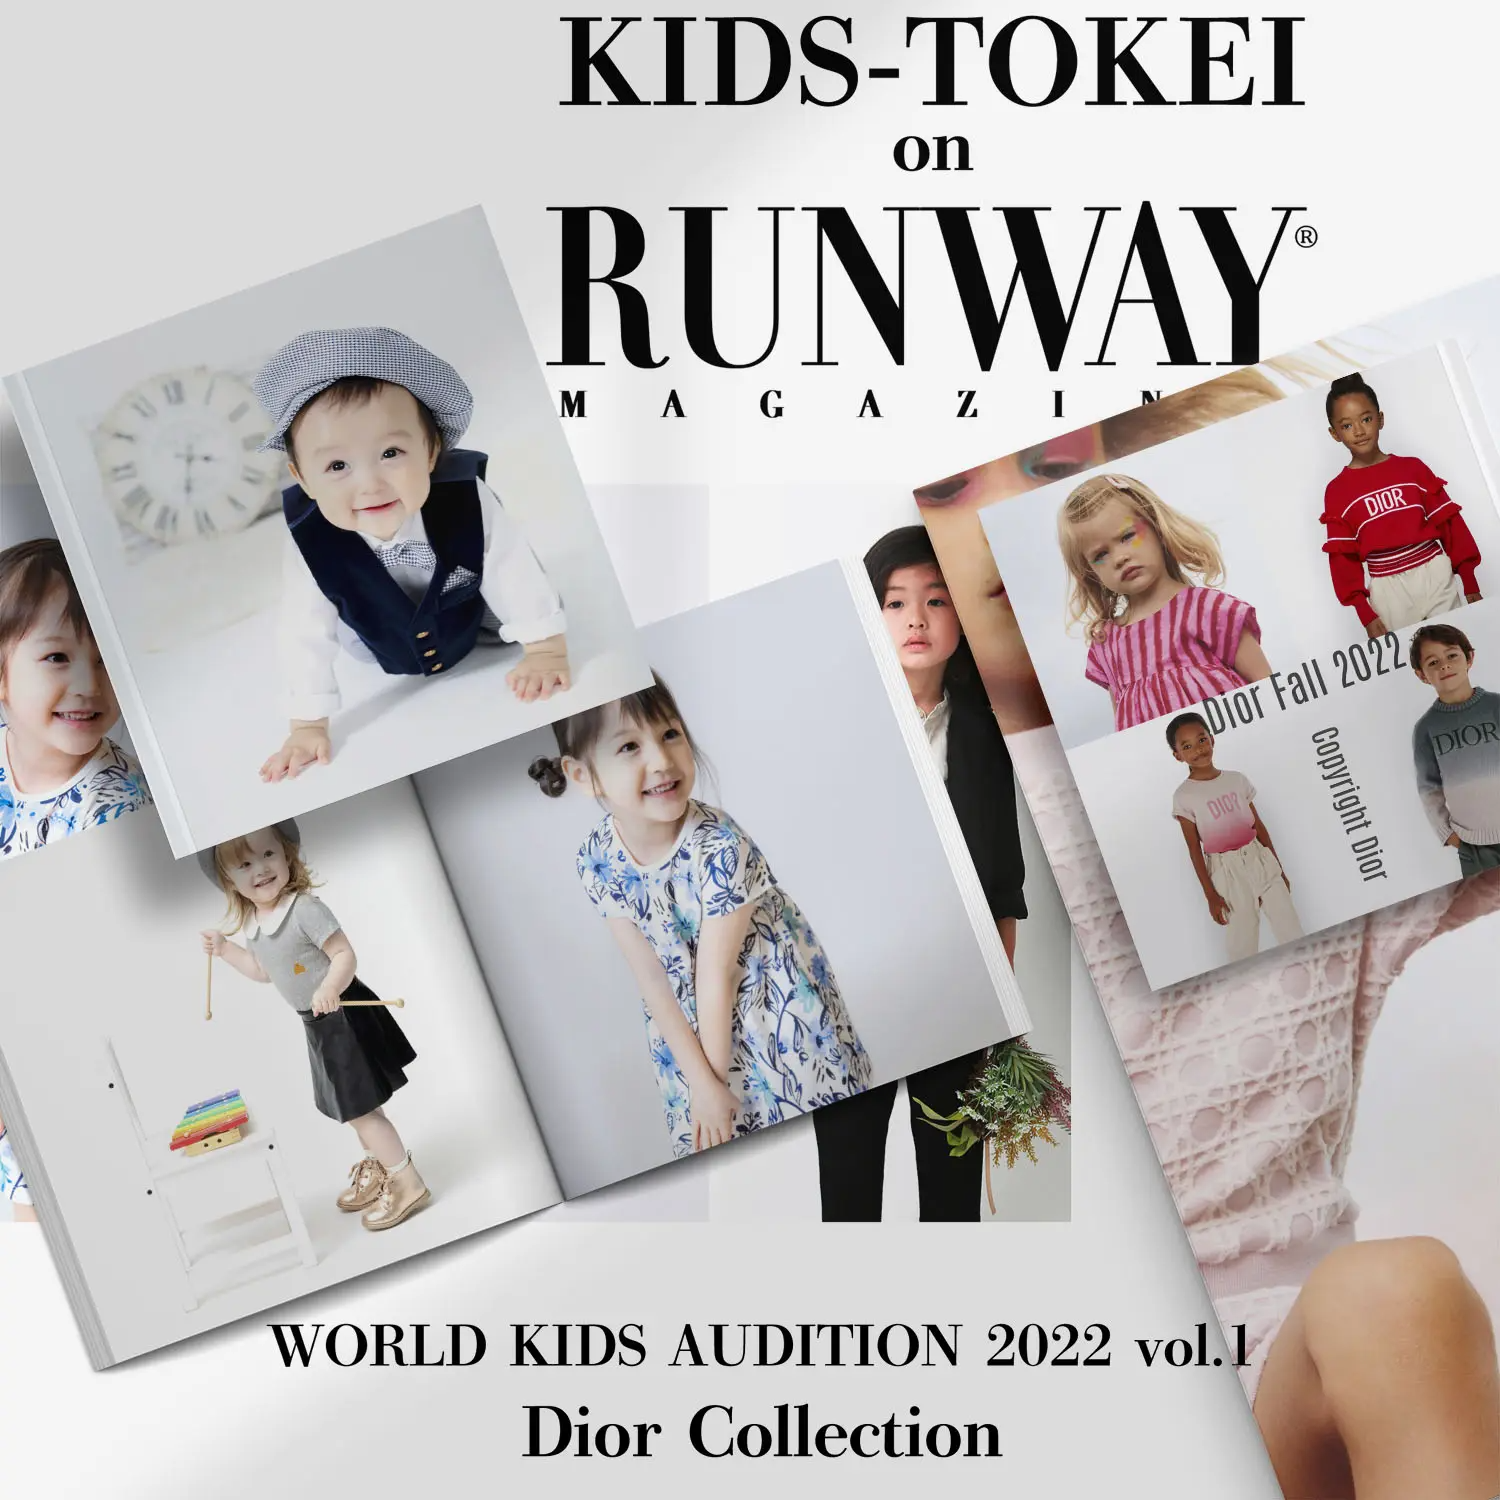 KIDS-TOKEI on RUNWAY MAGAZINE ®